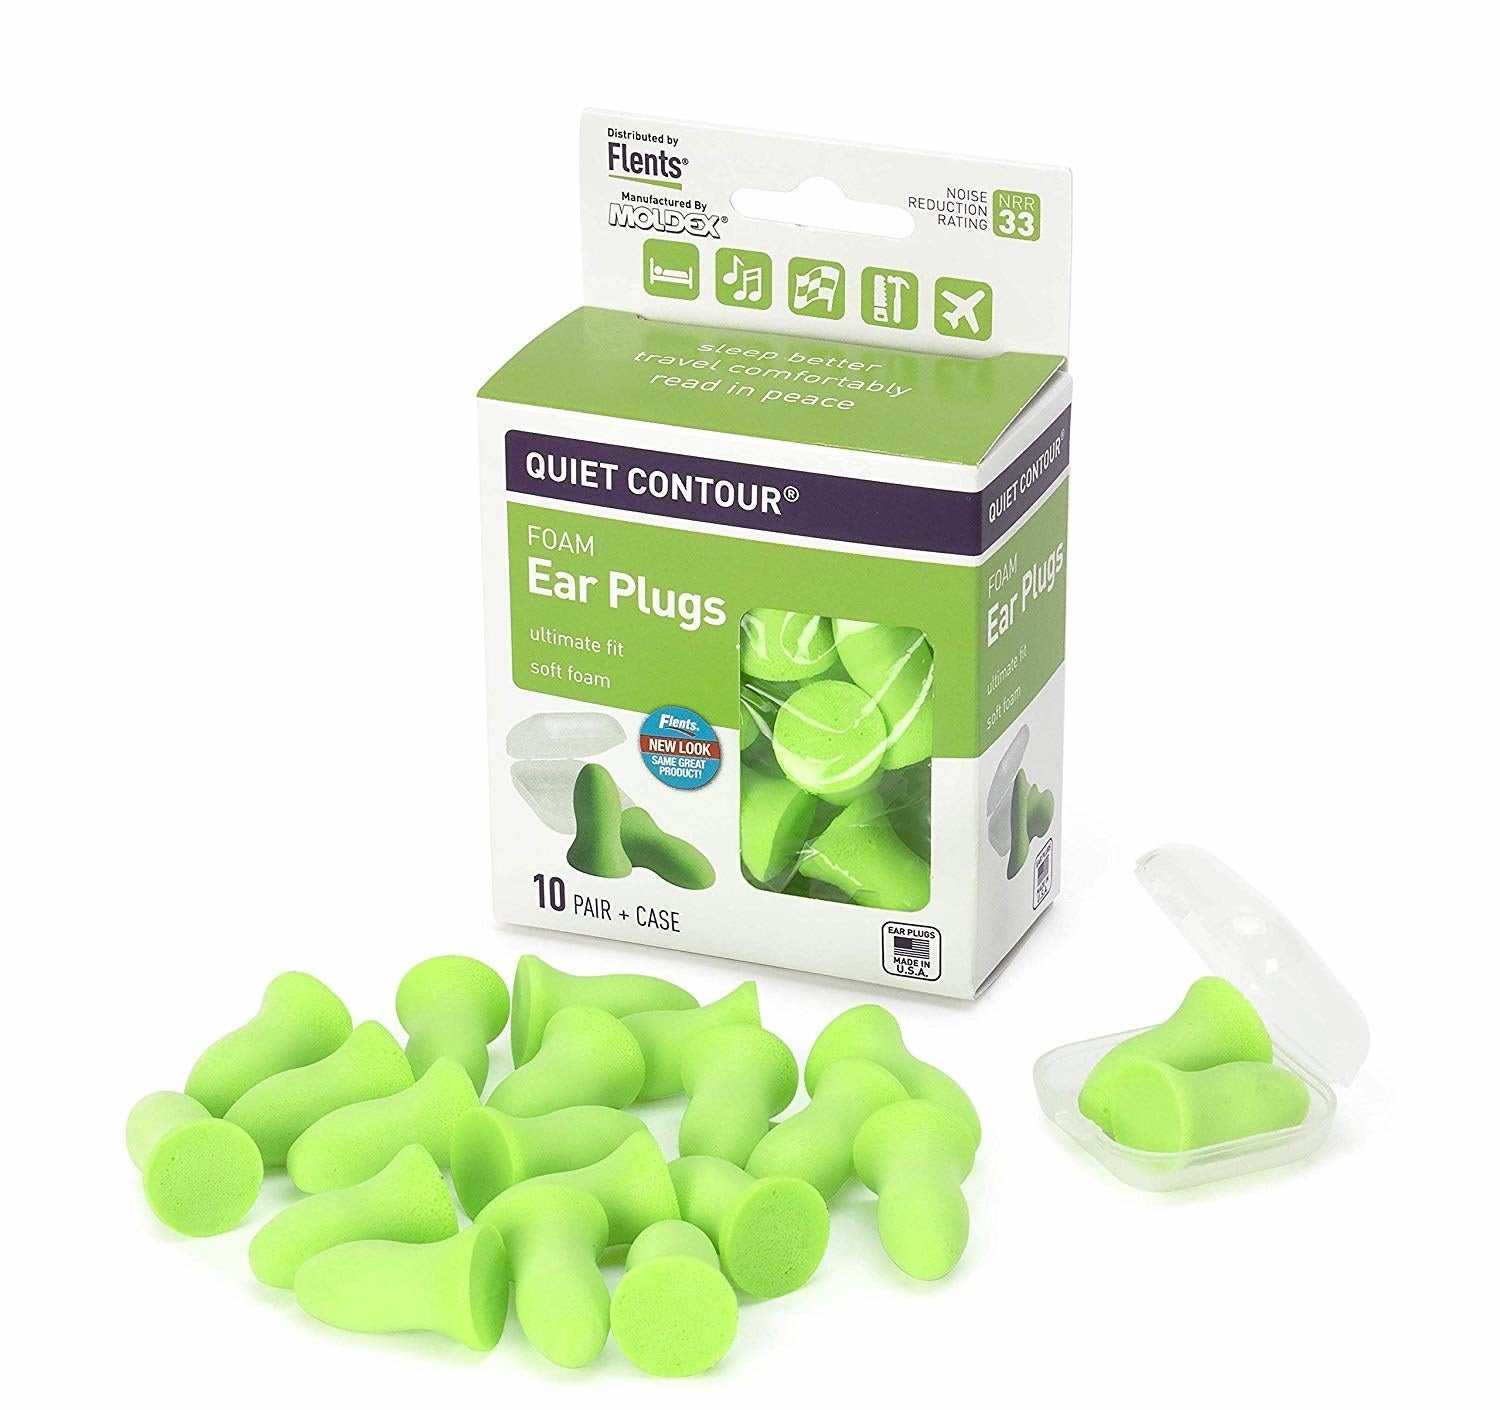 Green ear plugs with box 